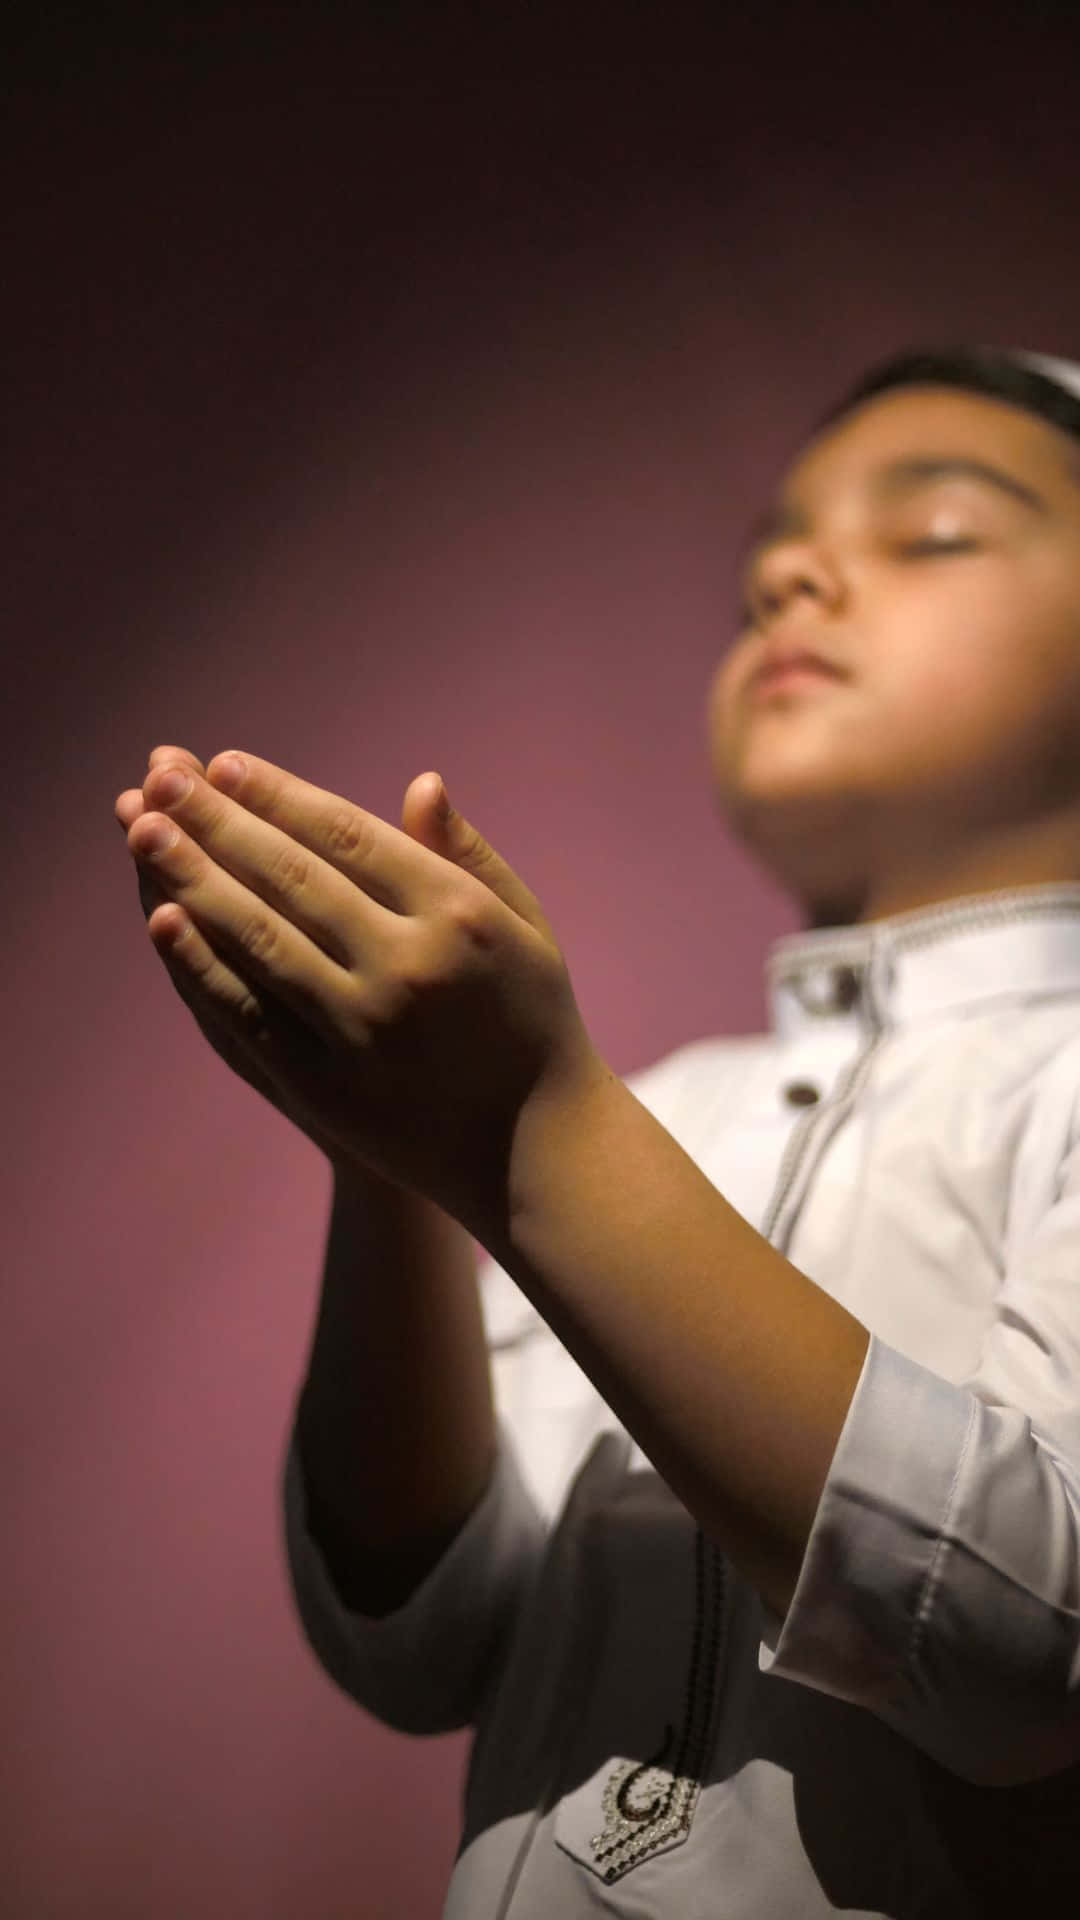 Praying Muslim Boy Portrait Violet Background Wallpaper